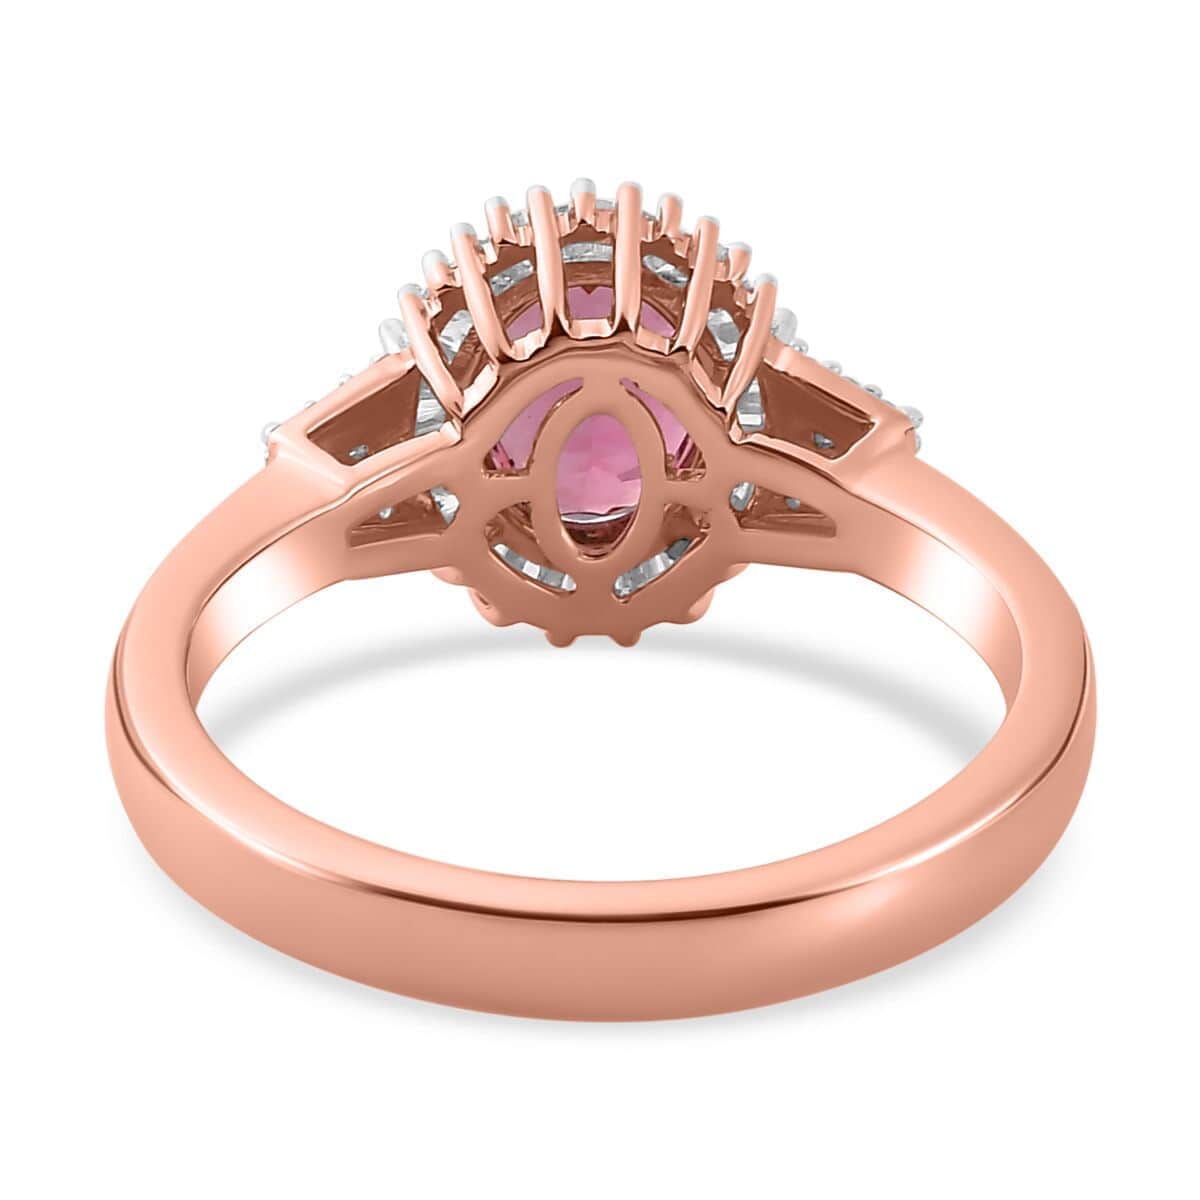 Luxoro 10K Rose Gold Premium Natural Calabar Pink Tourmaline and G-H I2 Diamond Ring (Size 6.0) 4.15 Grams 1.50 ctw image number 4